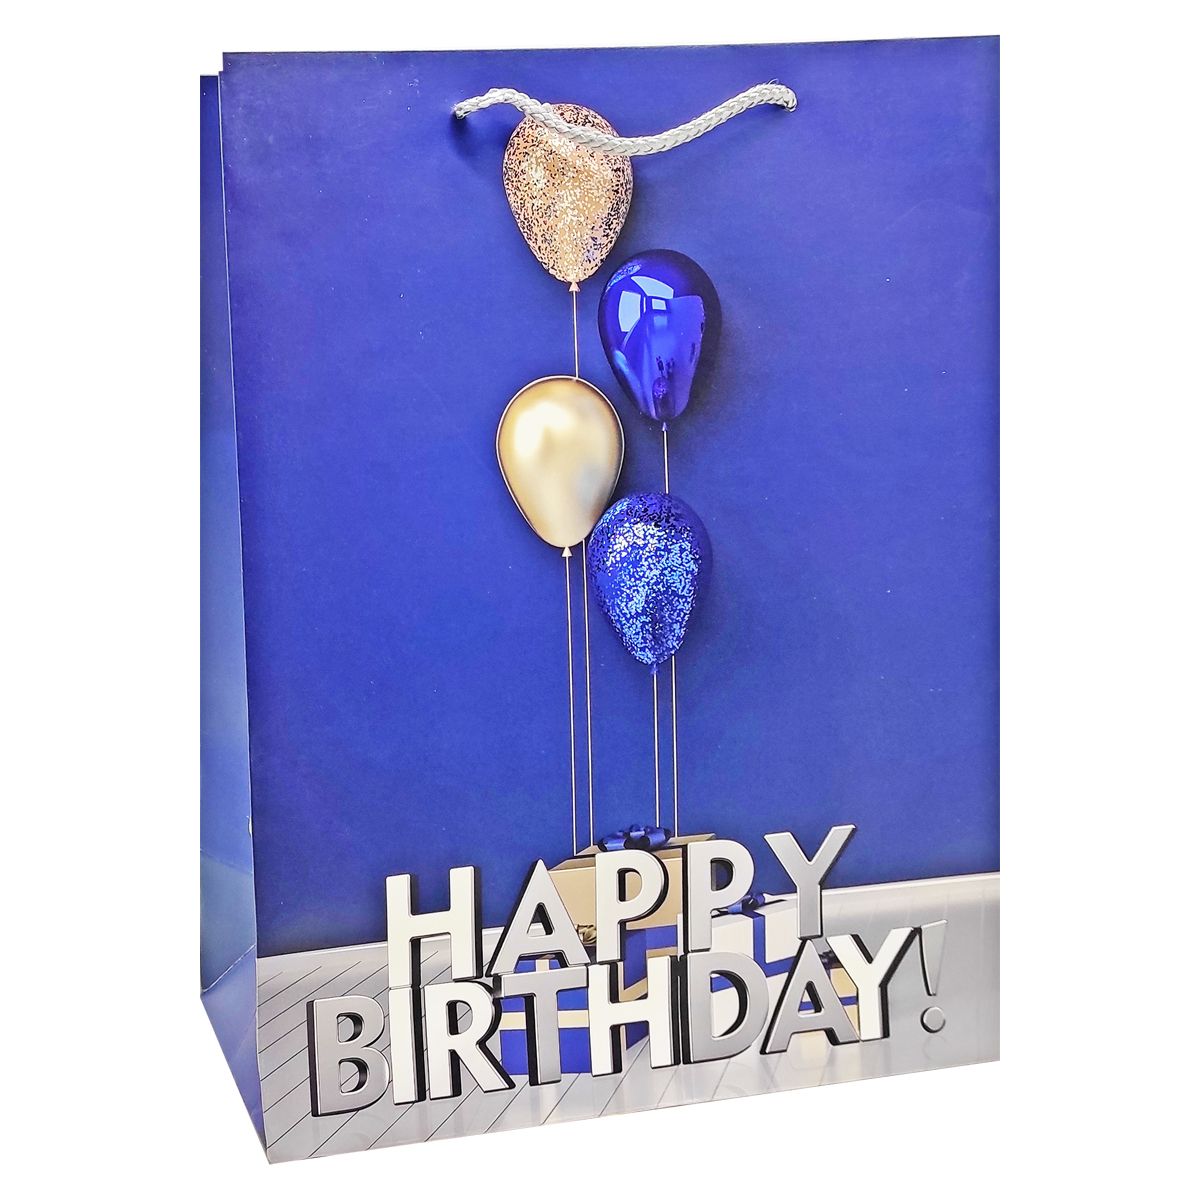 Пакет бумажный "Нарру Birthday", синій